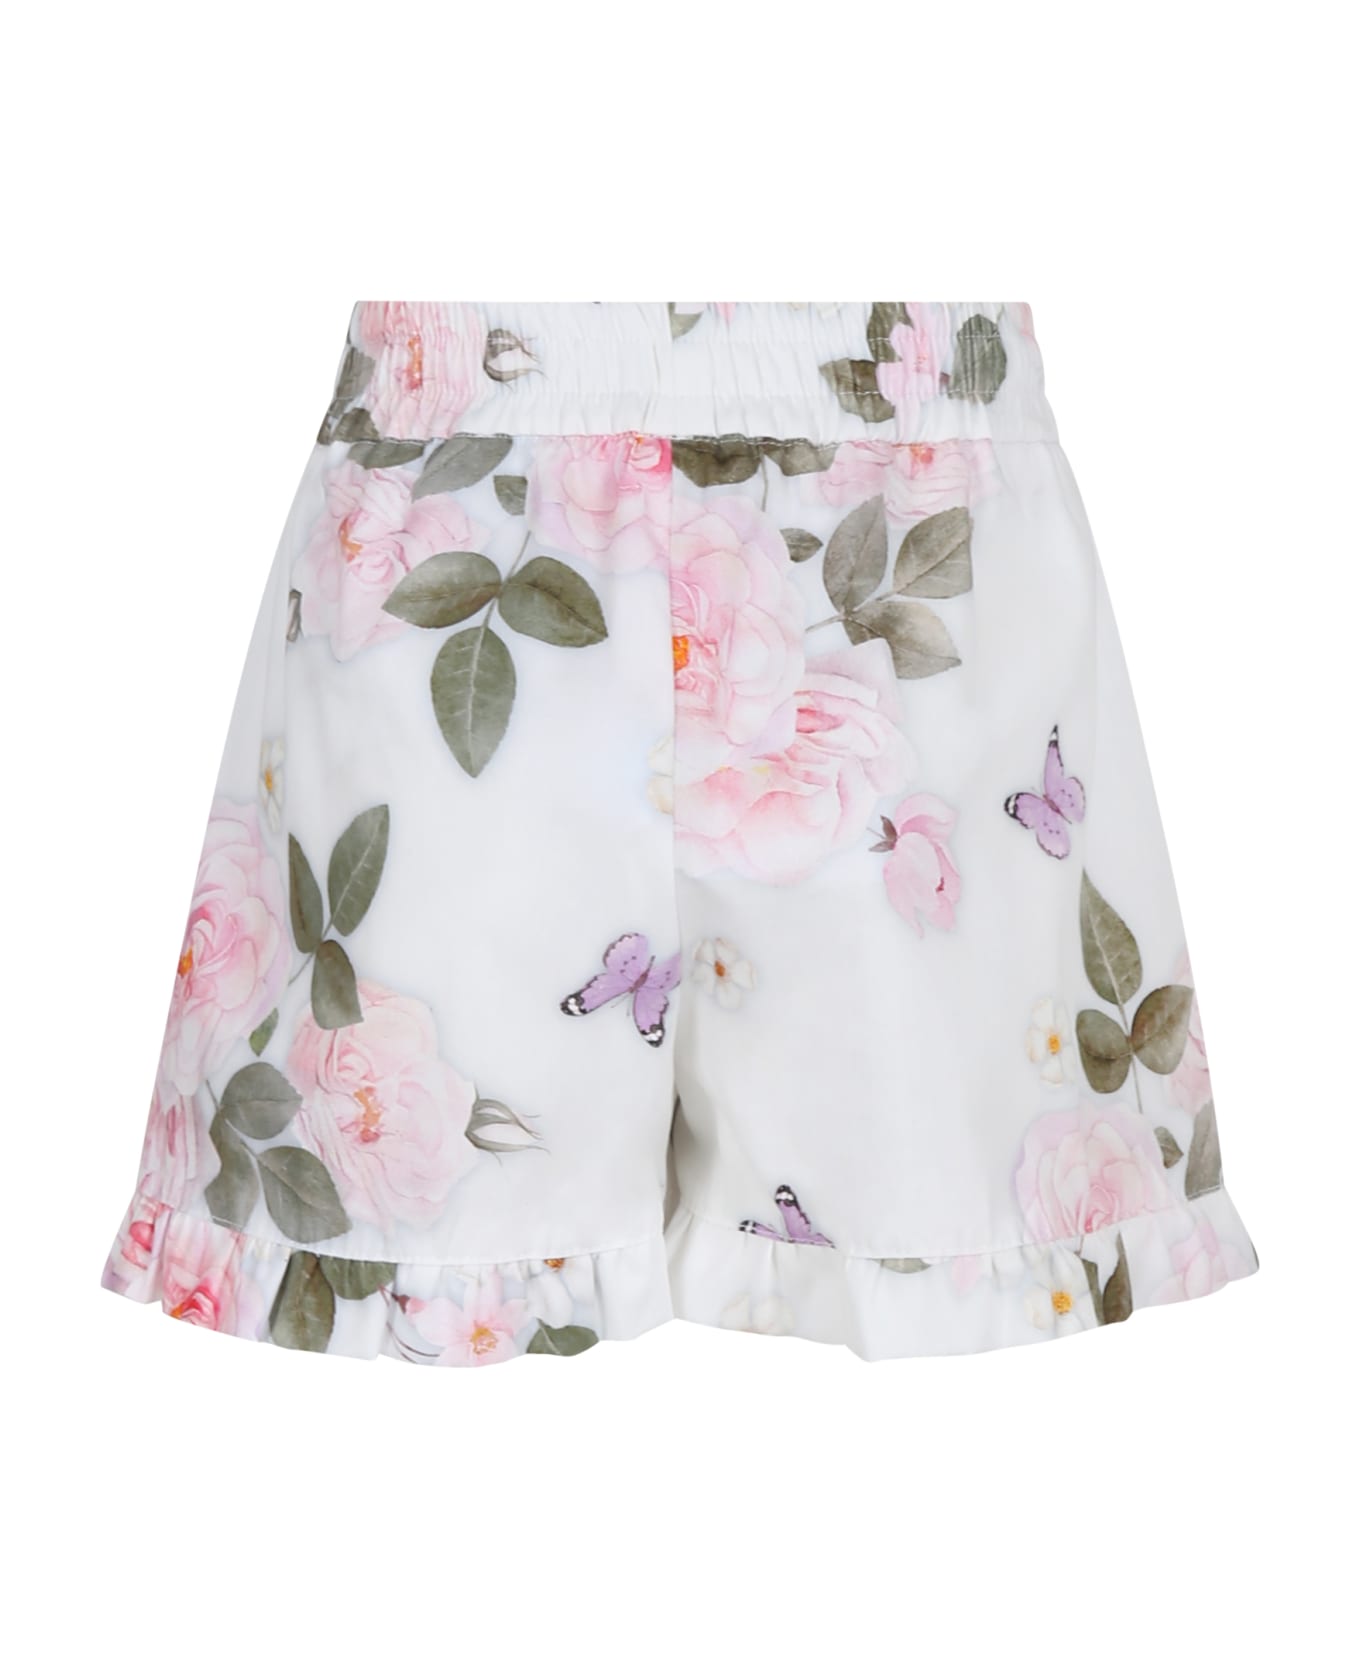 Monnalisa White Shorts For Girl With Floreal Print - White